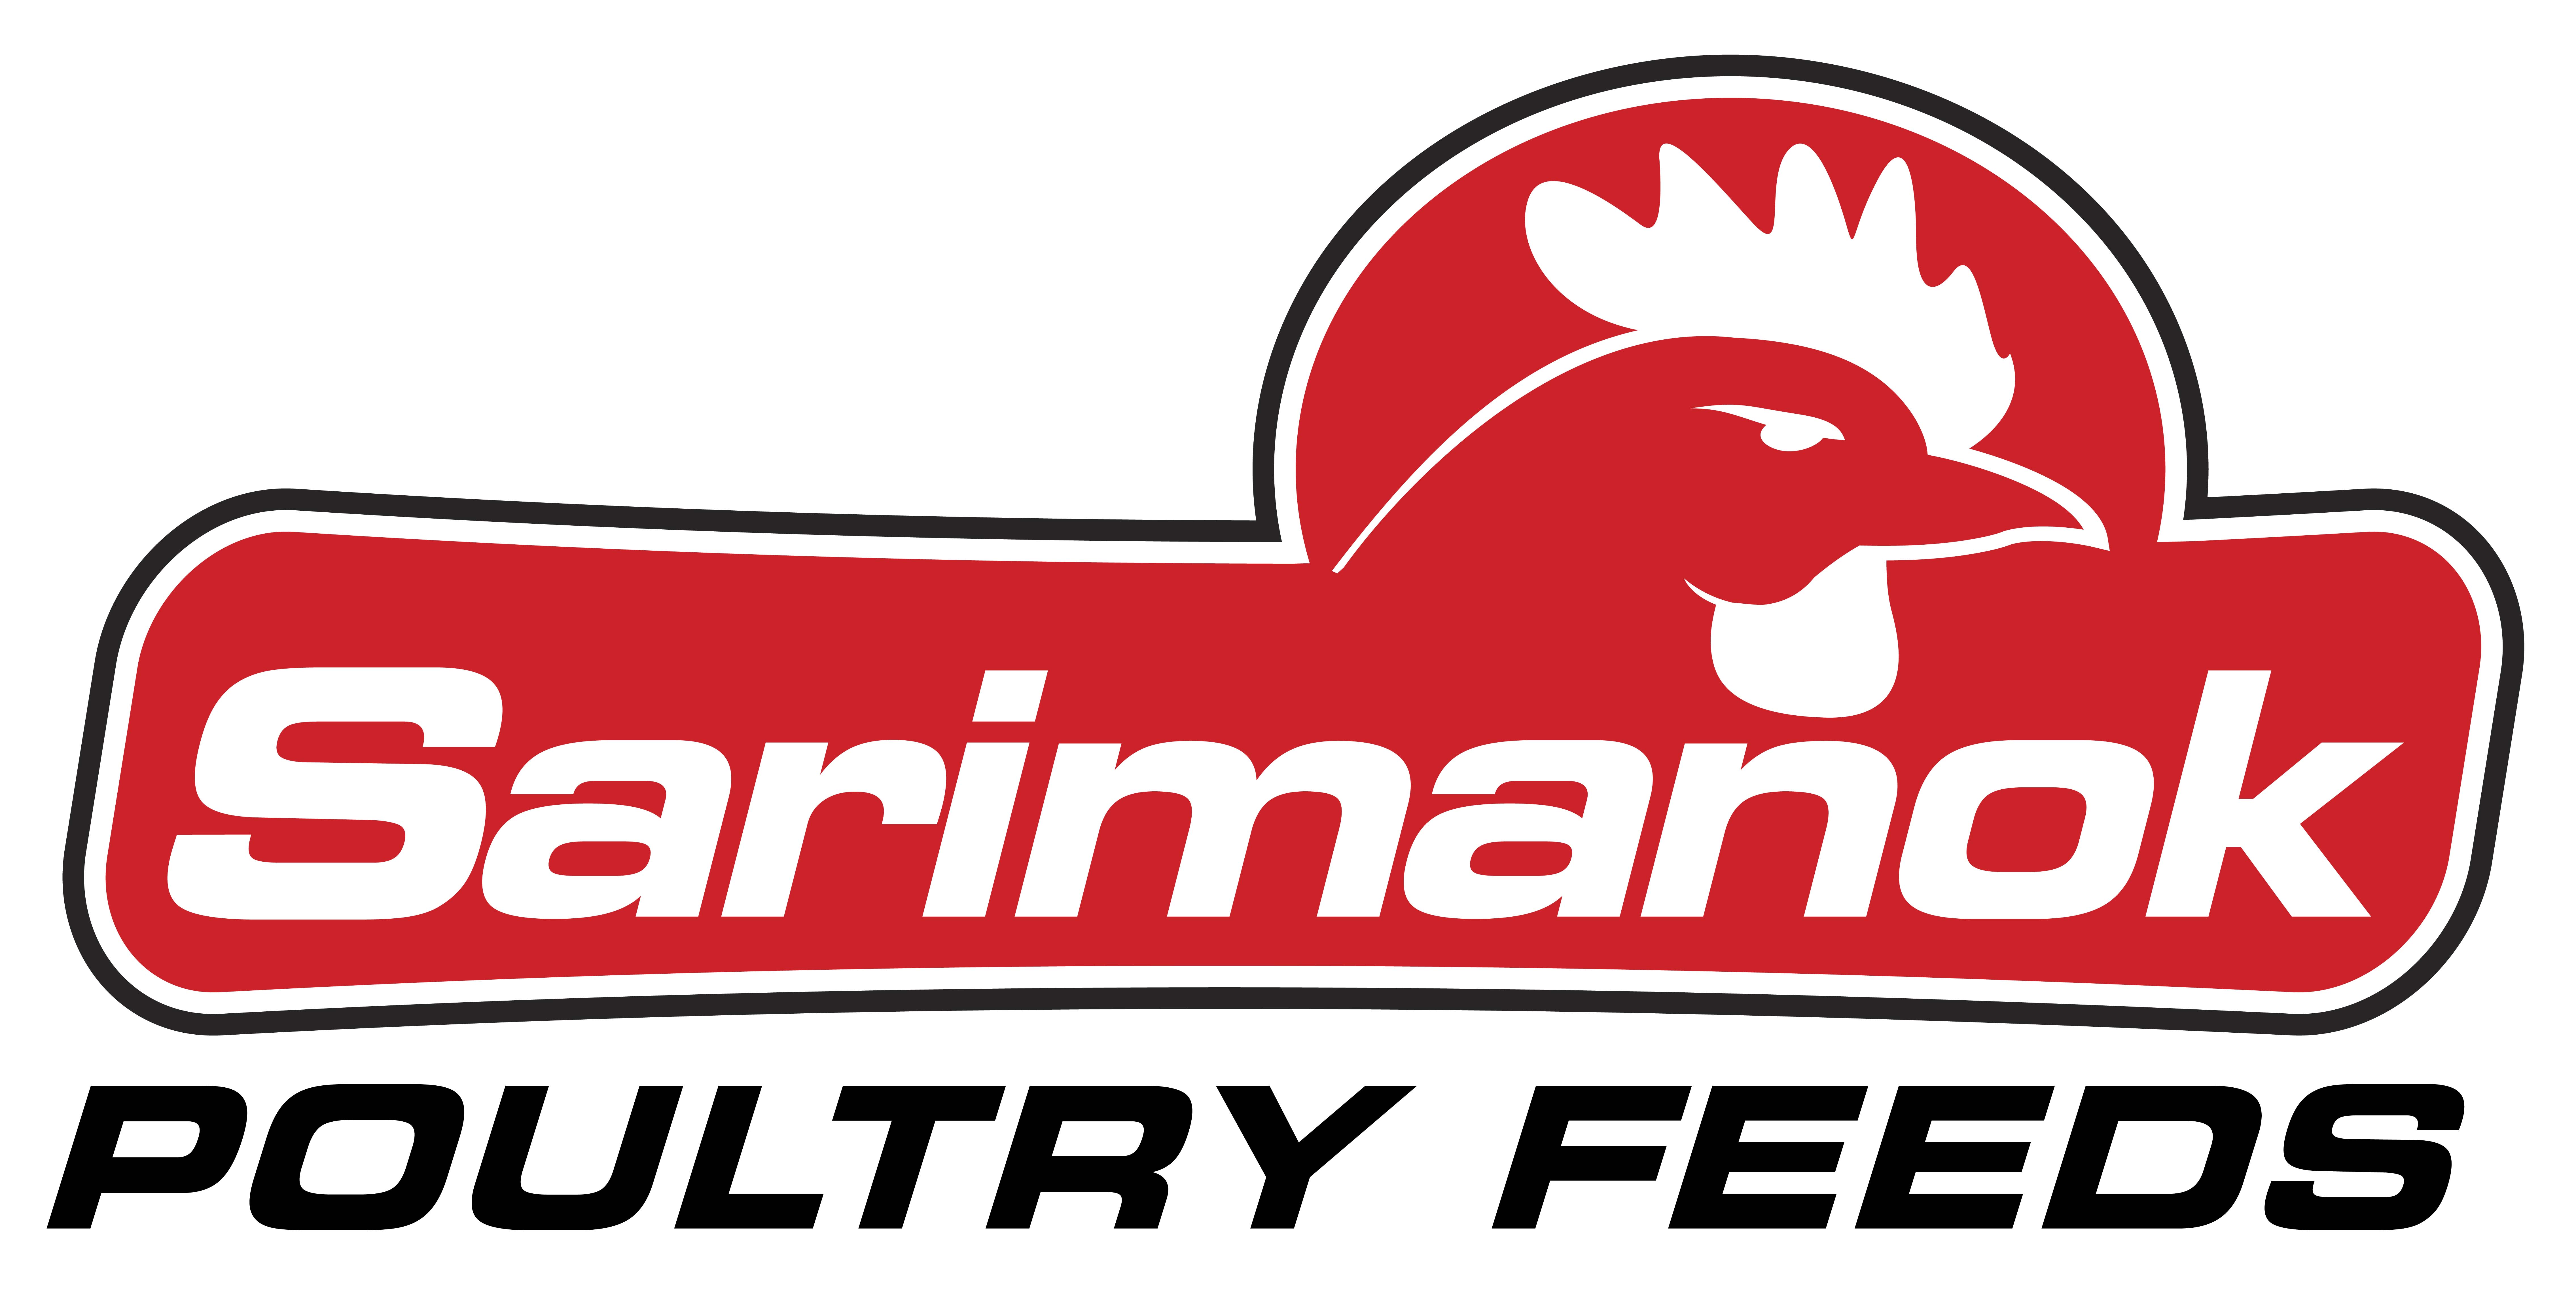 Sarimanok Poultry Feeds Logo